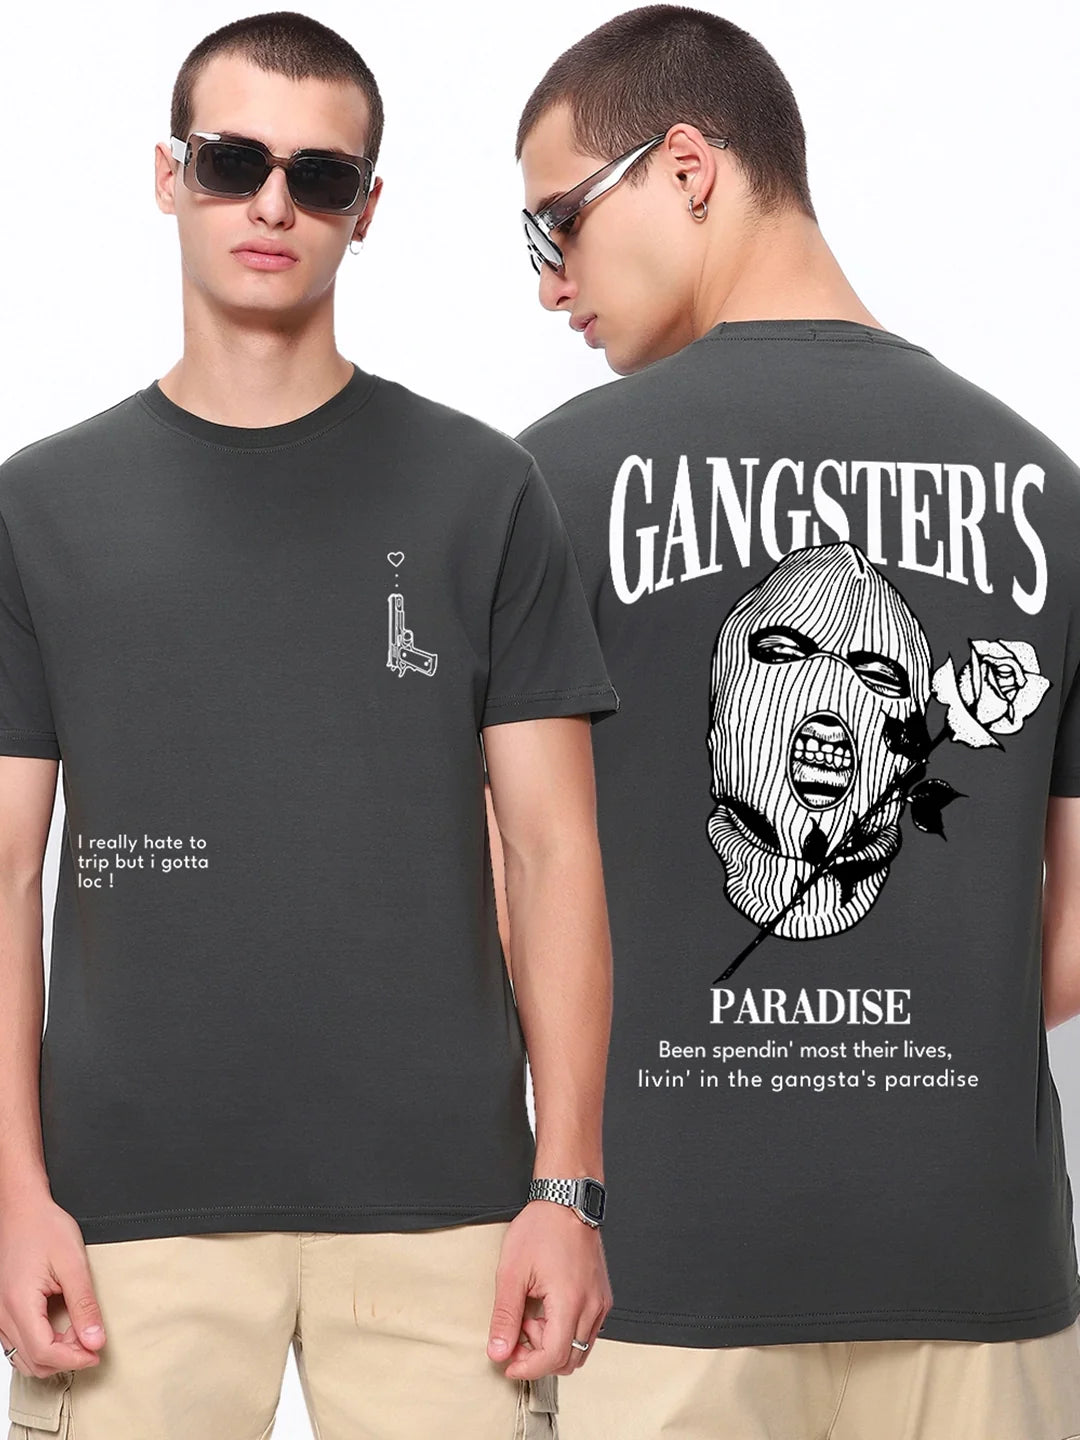 Men's Love the Gangster's Oversized Black Graphic Tee